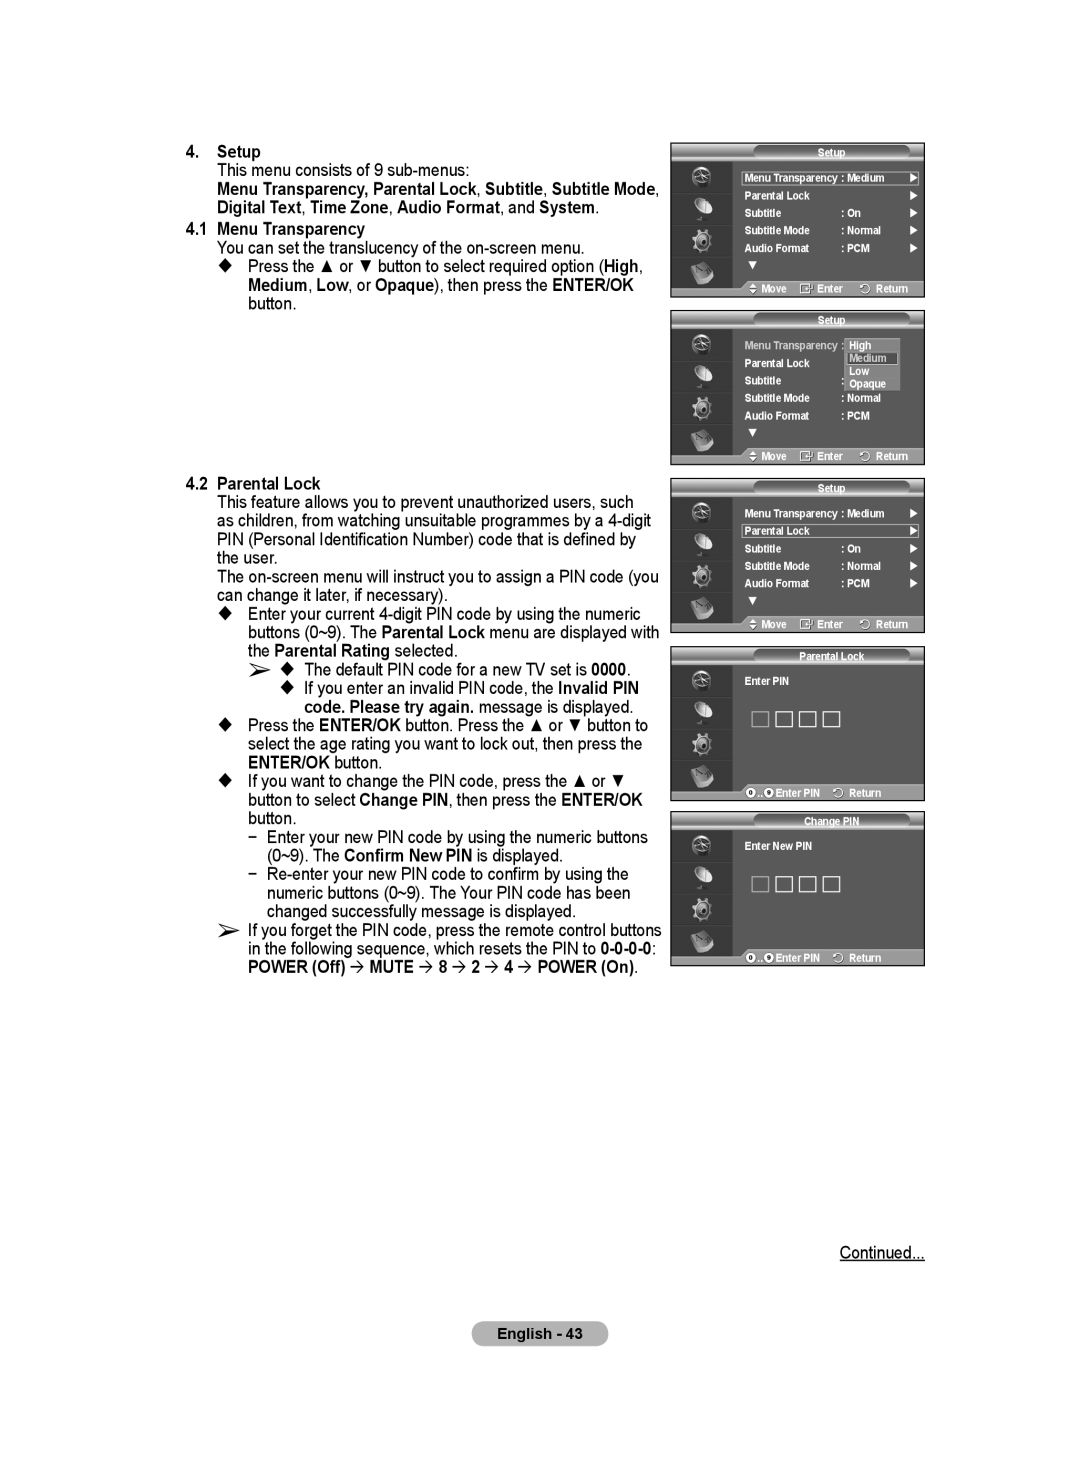 Samsung BN68-01171B-03 manual Setup, 4.1Menu Transparency, 4.2Parental Lock 